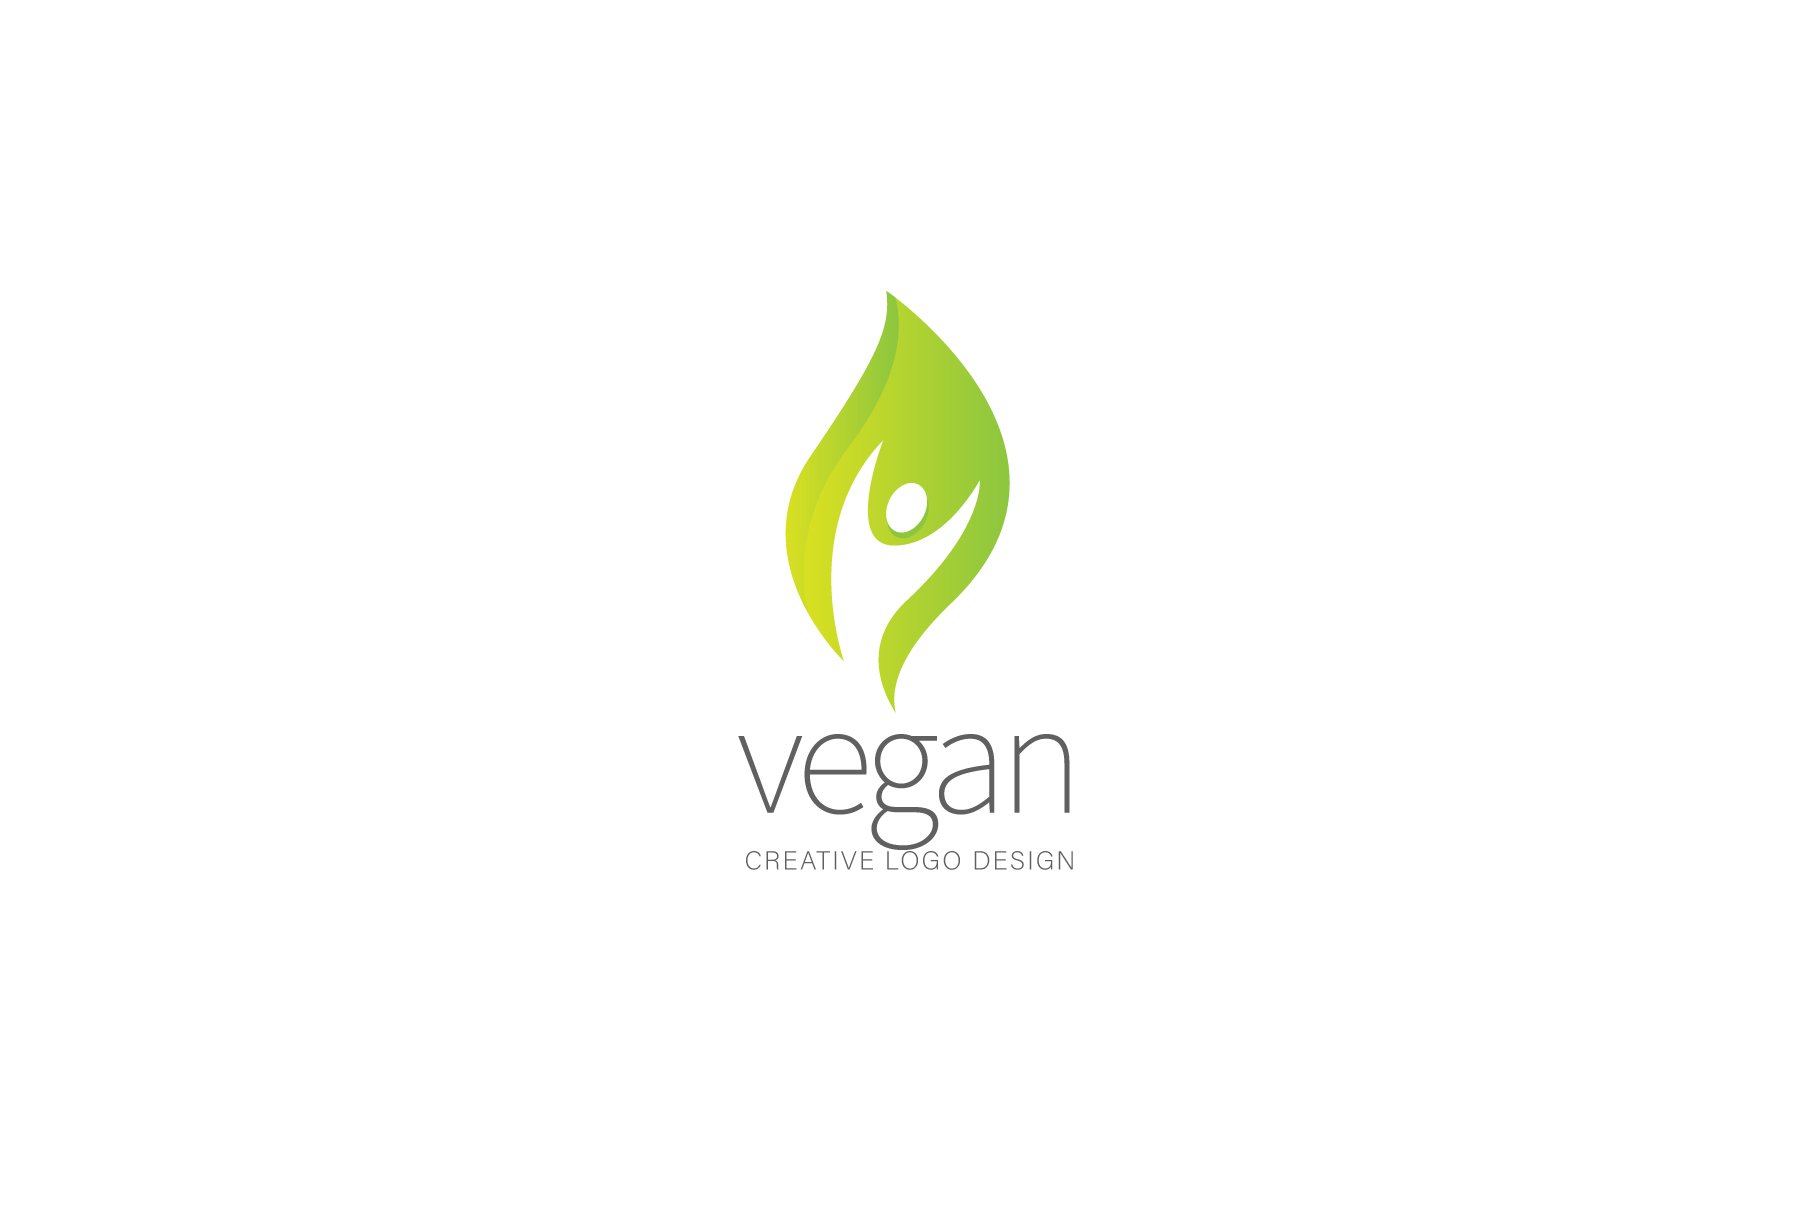 vegan logo cover image.